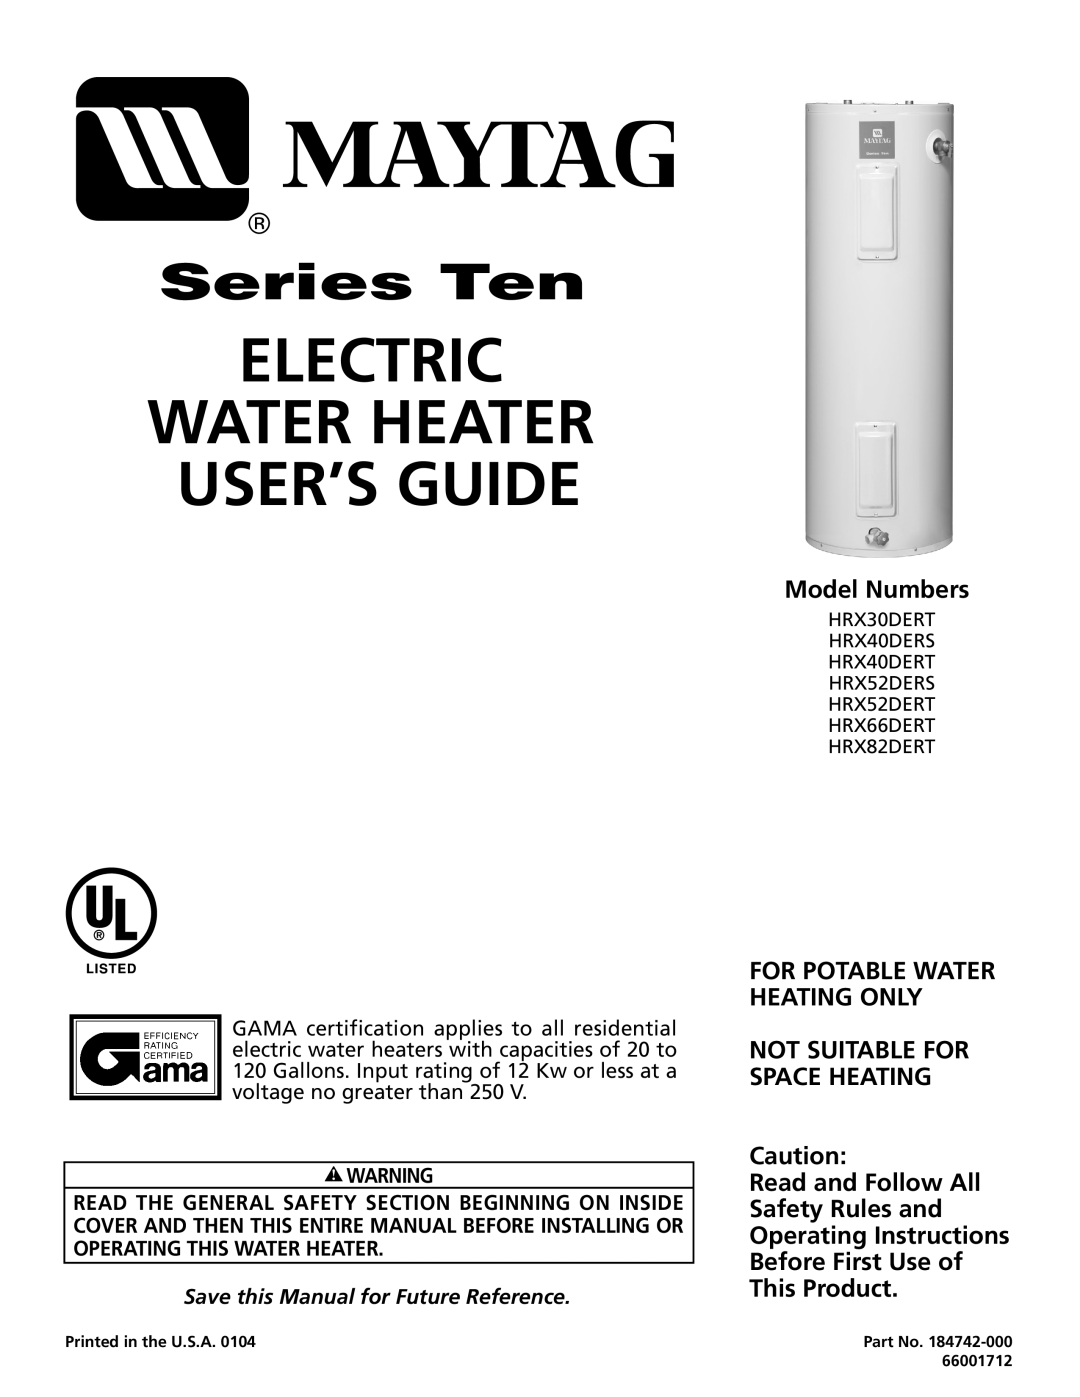 Maytag HRX52DERT manual Electric Water Heater User’S Guide, Series Ten, Model Numbers, This Product, HRX66DERT HRX82DERT 